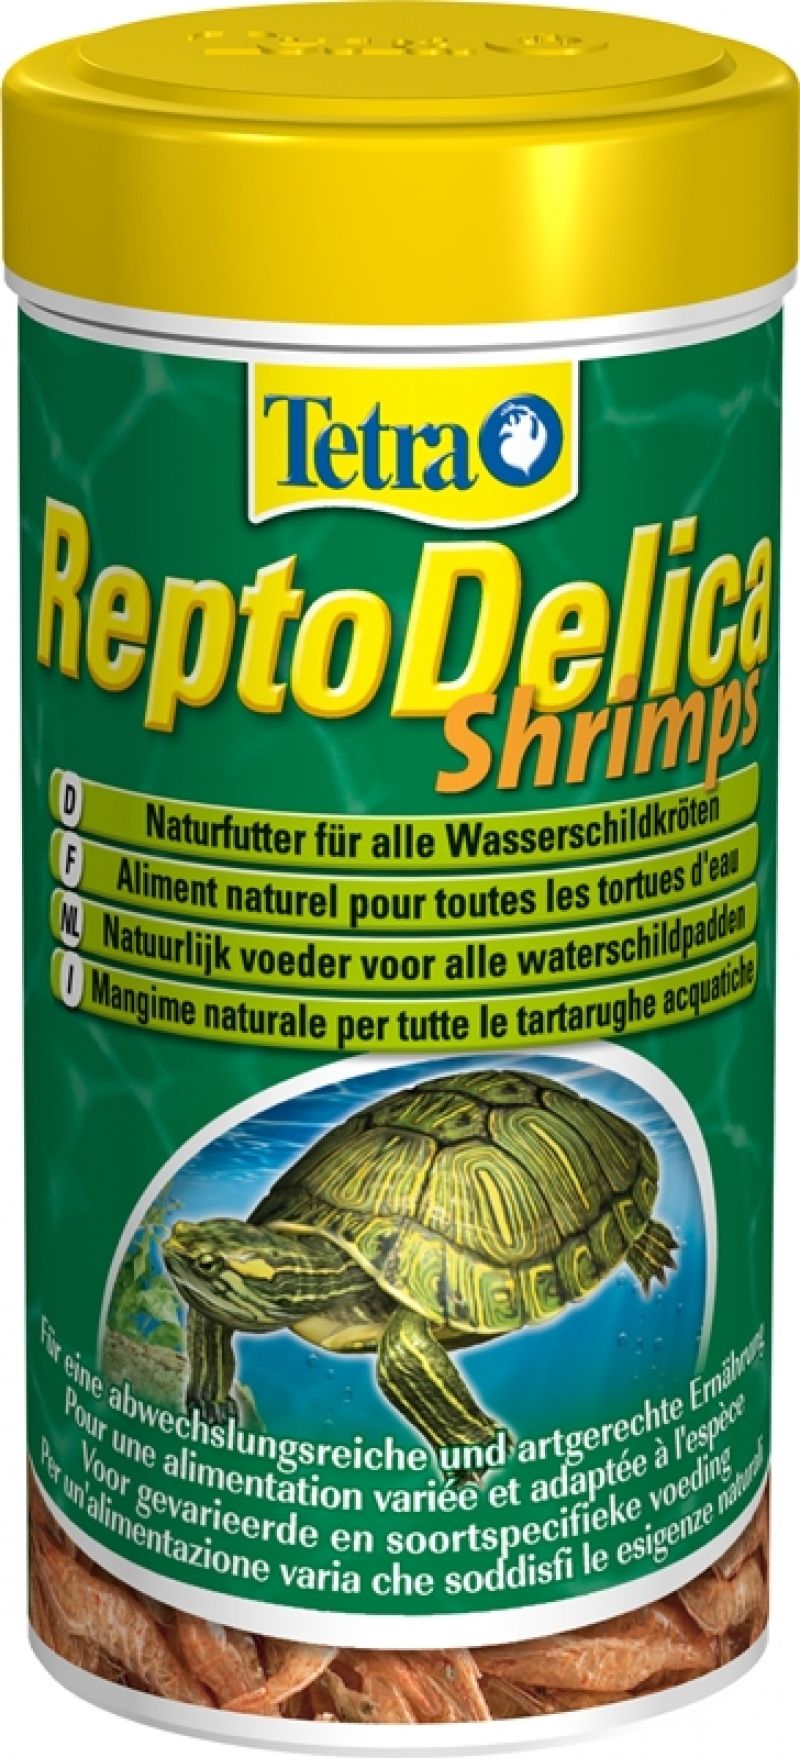 Tetra ReptoDelica Shrimps 250 ml 1105540 (4004218169241)